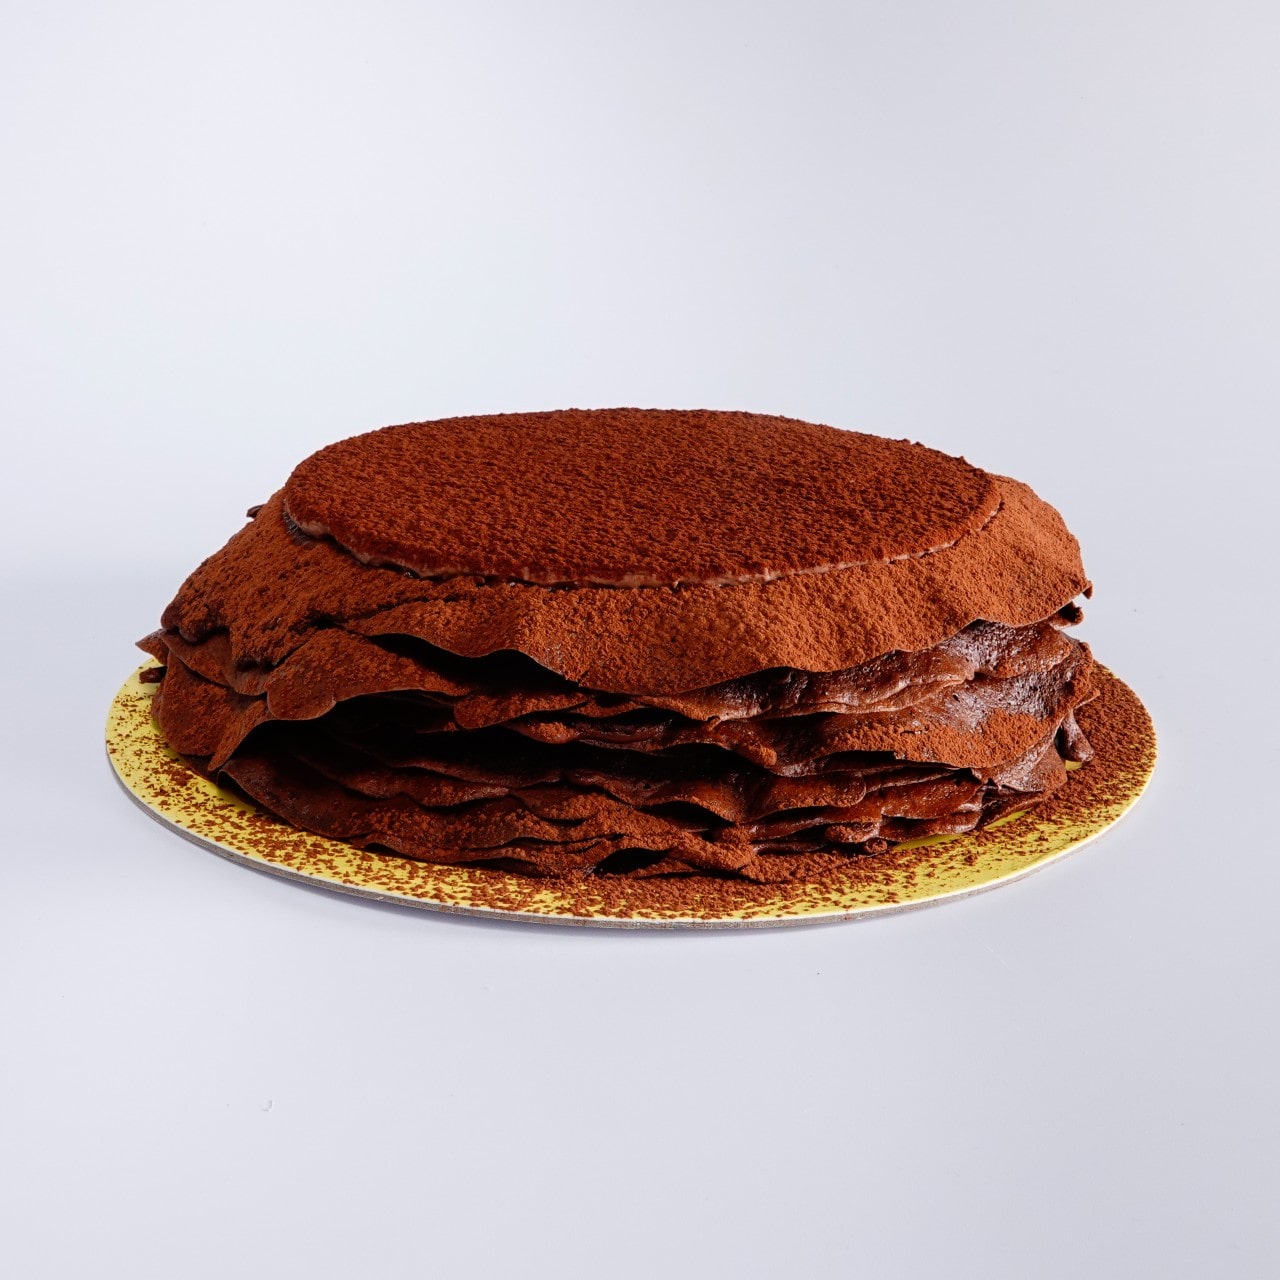 Chocolate Crepe Cake